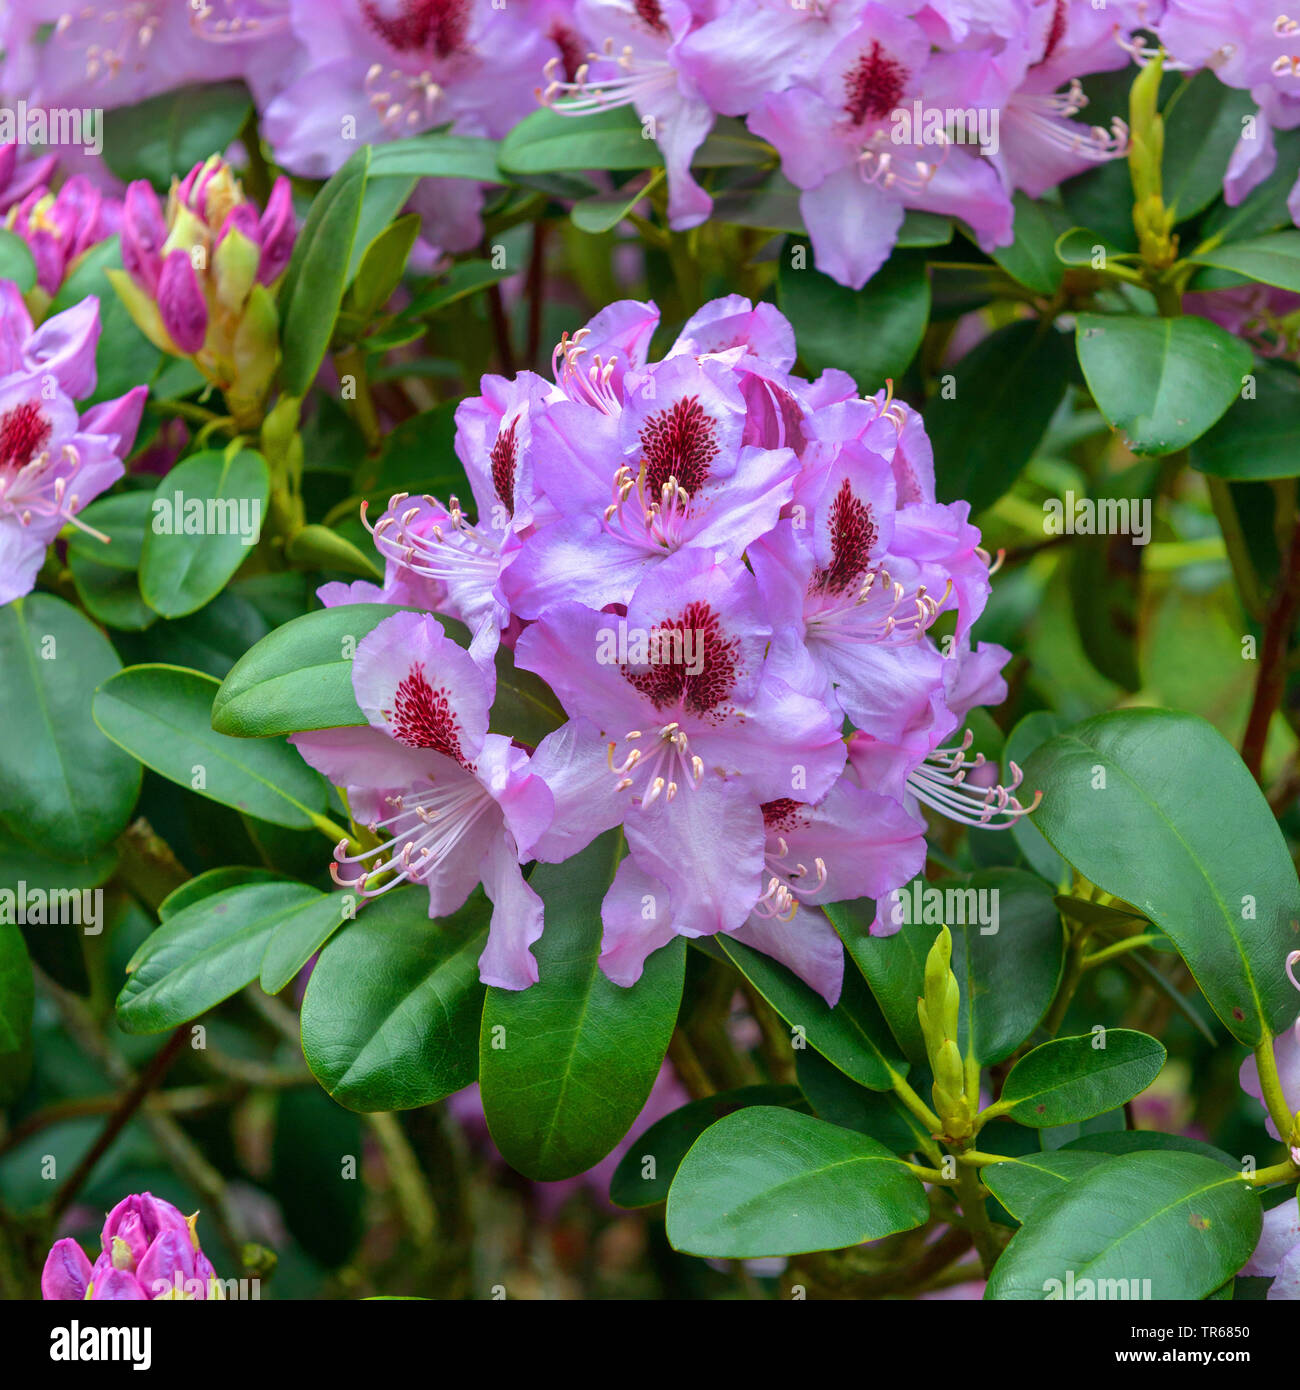 Catawba rhododendron, Catawba rose bay (Rhododendron 'Humboldt', Rhododendron Humboldt, Rhododendron catawbiense), blooming, cultivar Humboldt Stock Photo